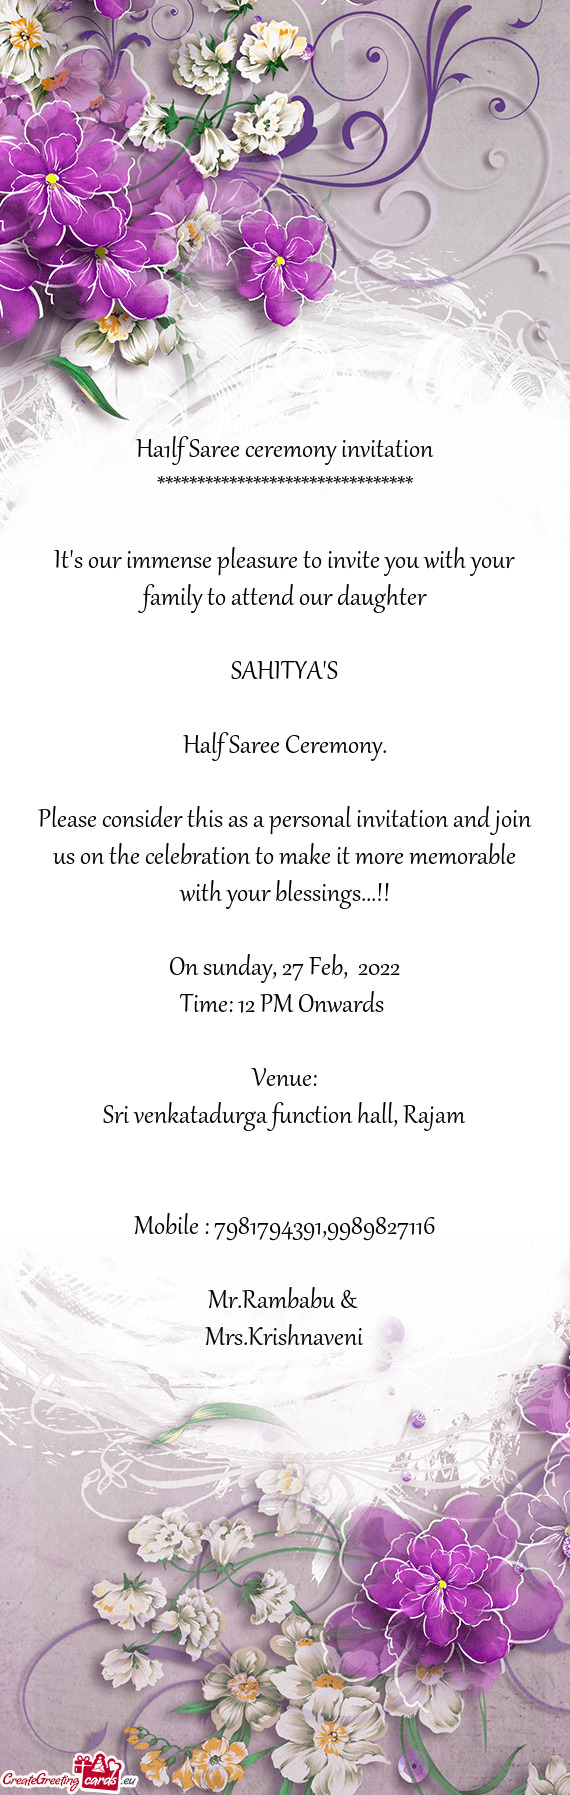 Ha1lf Saree ceremony invitation